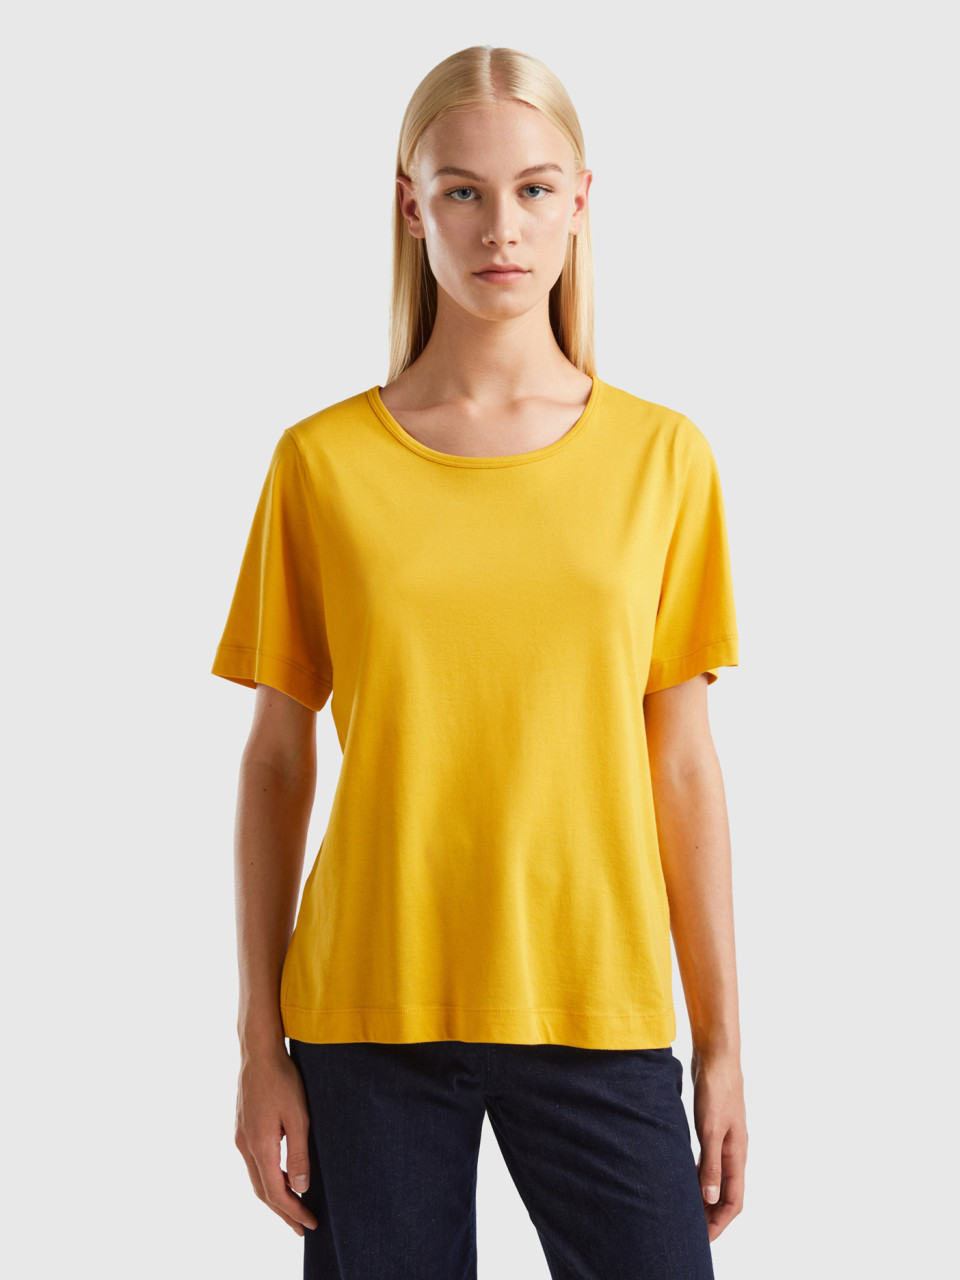 Benetton, Mustard Yellow Short Sleeve T-shirt, Yellow, Women